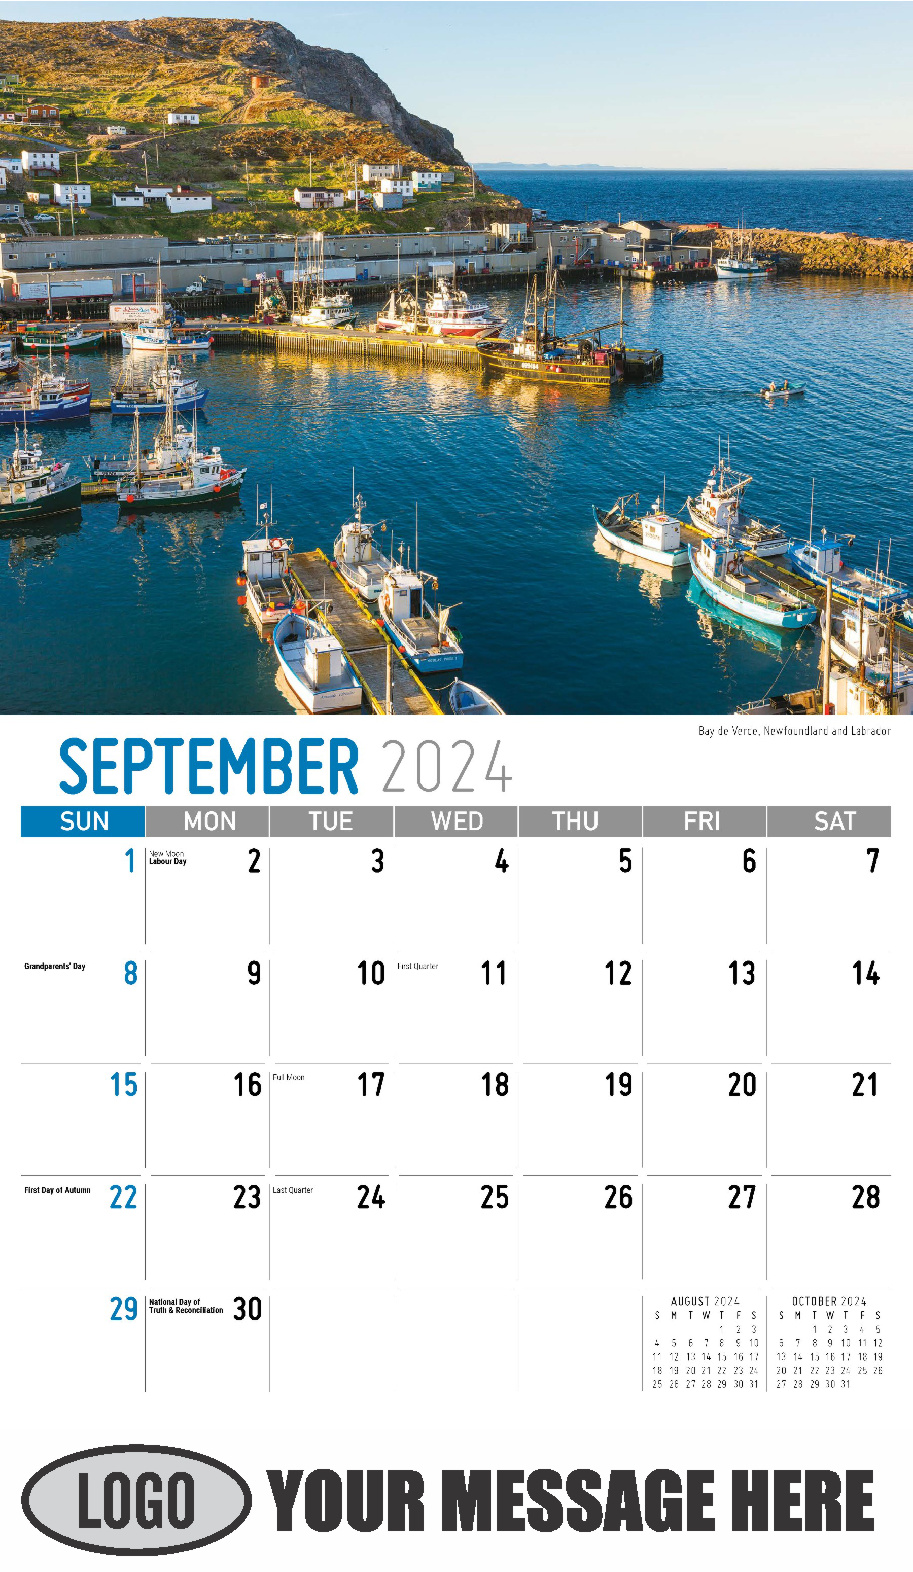 Atlantic Canada Scenic 2024 Business Promotion Calendar - September